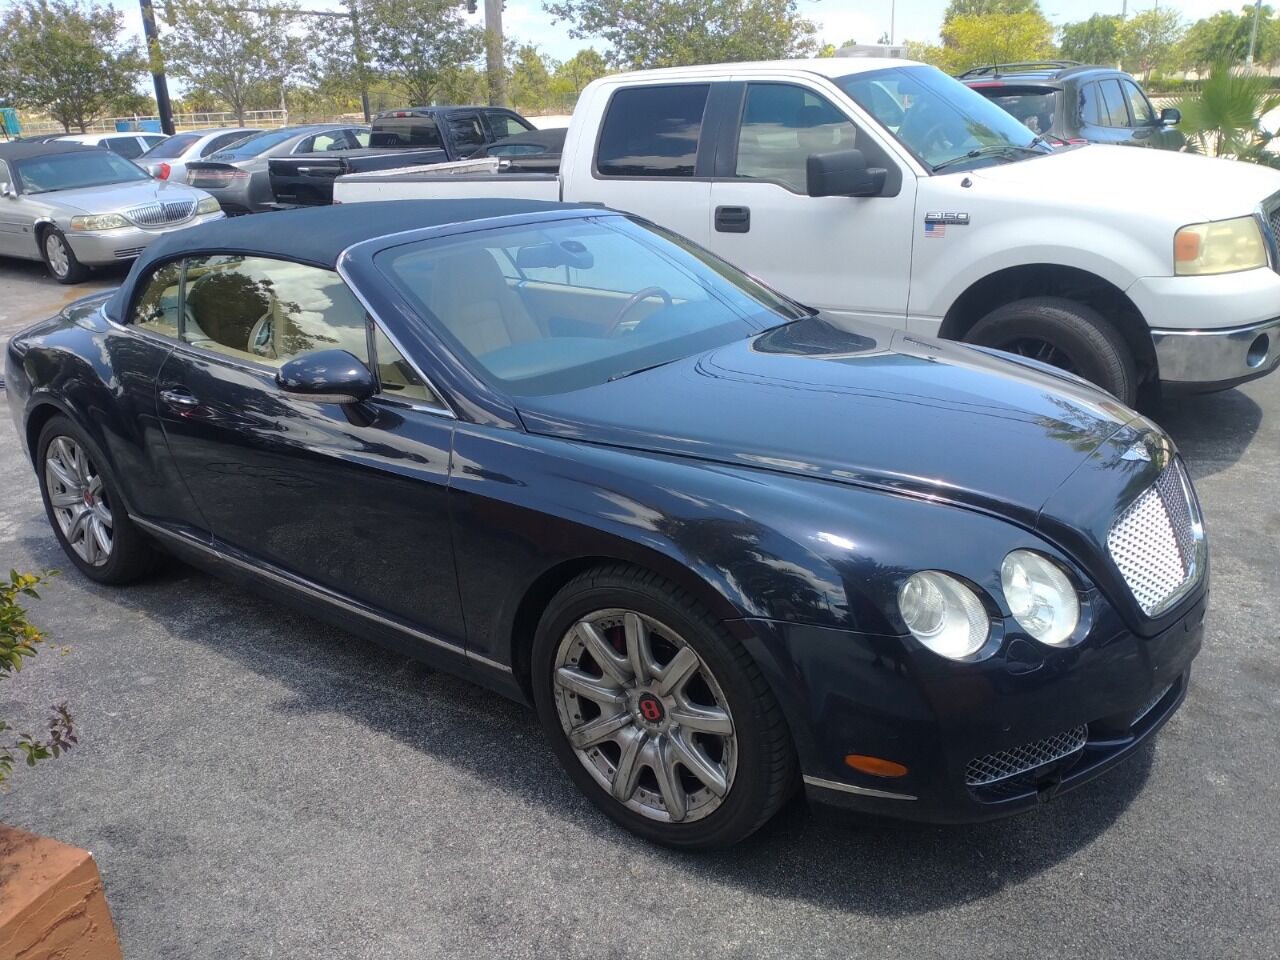 2008 Bentley Continental Convertible - $34,500